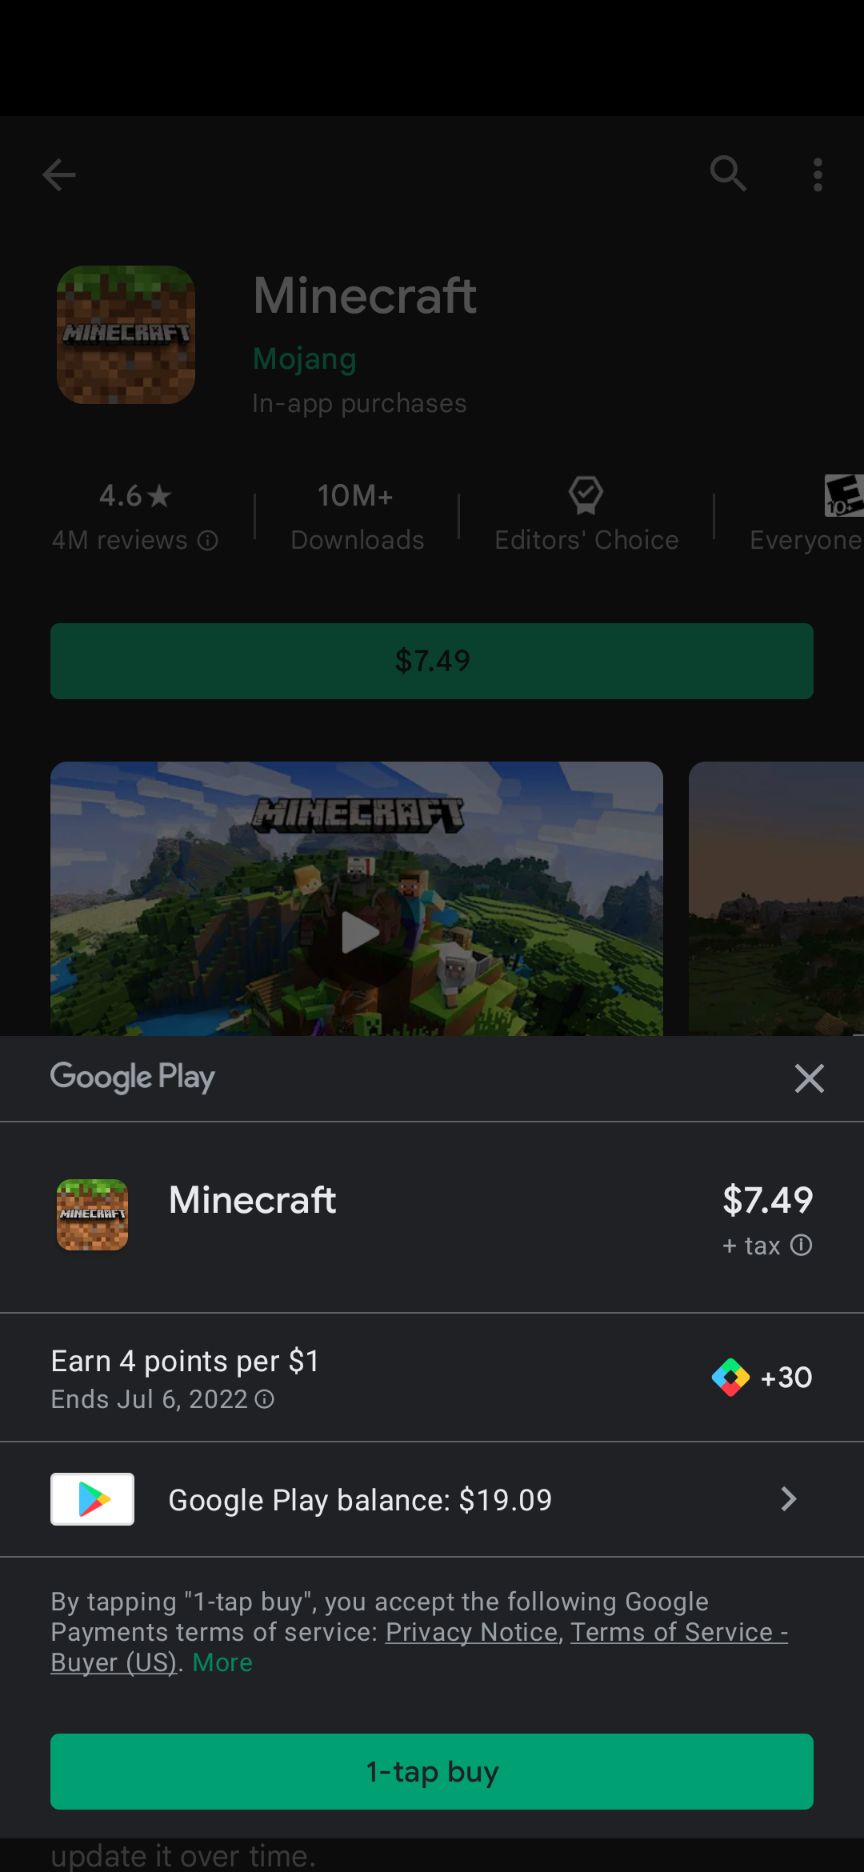 google game player download free